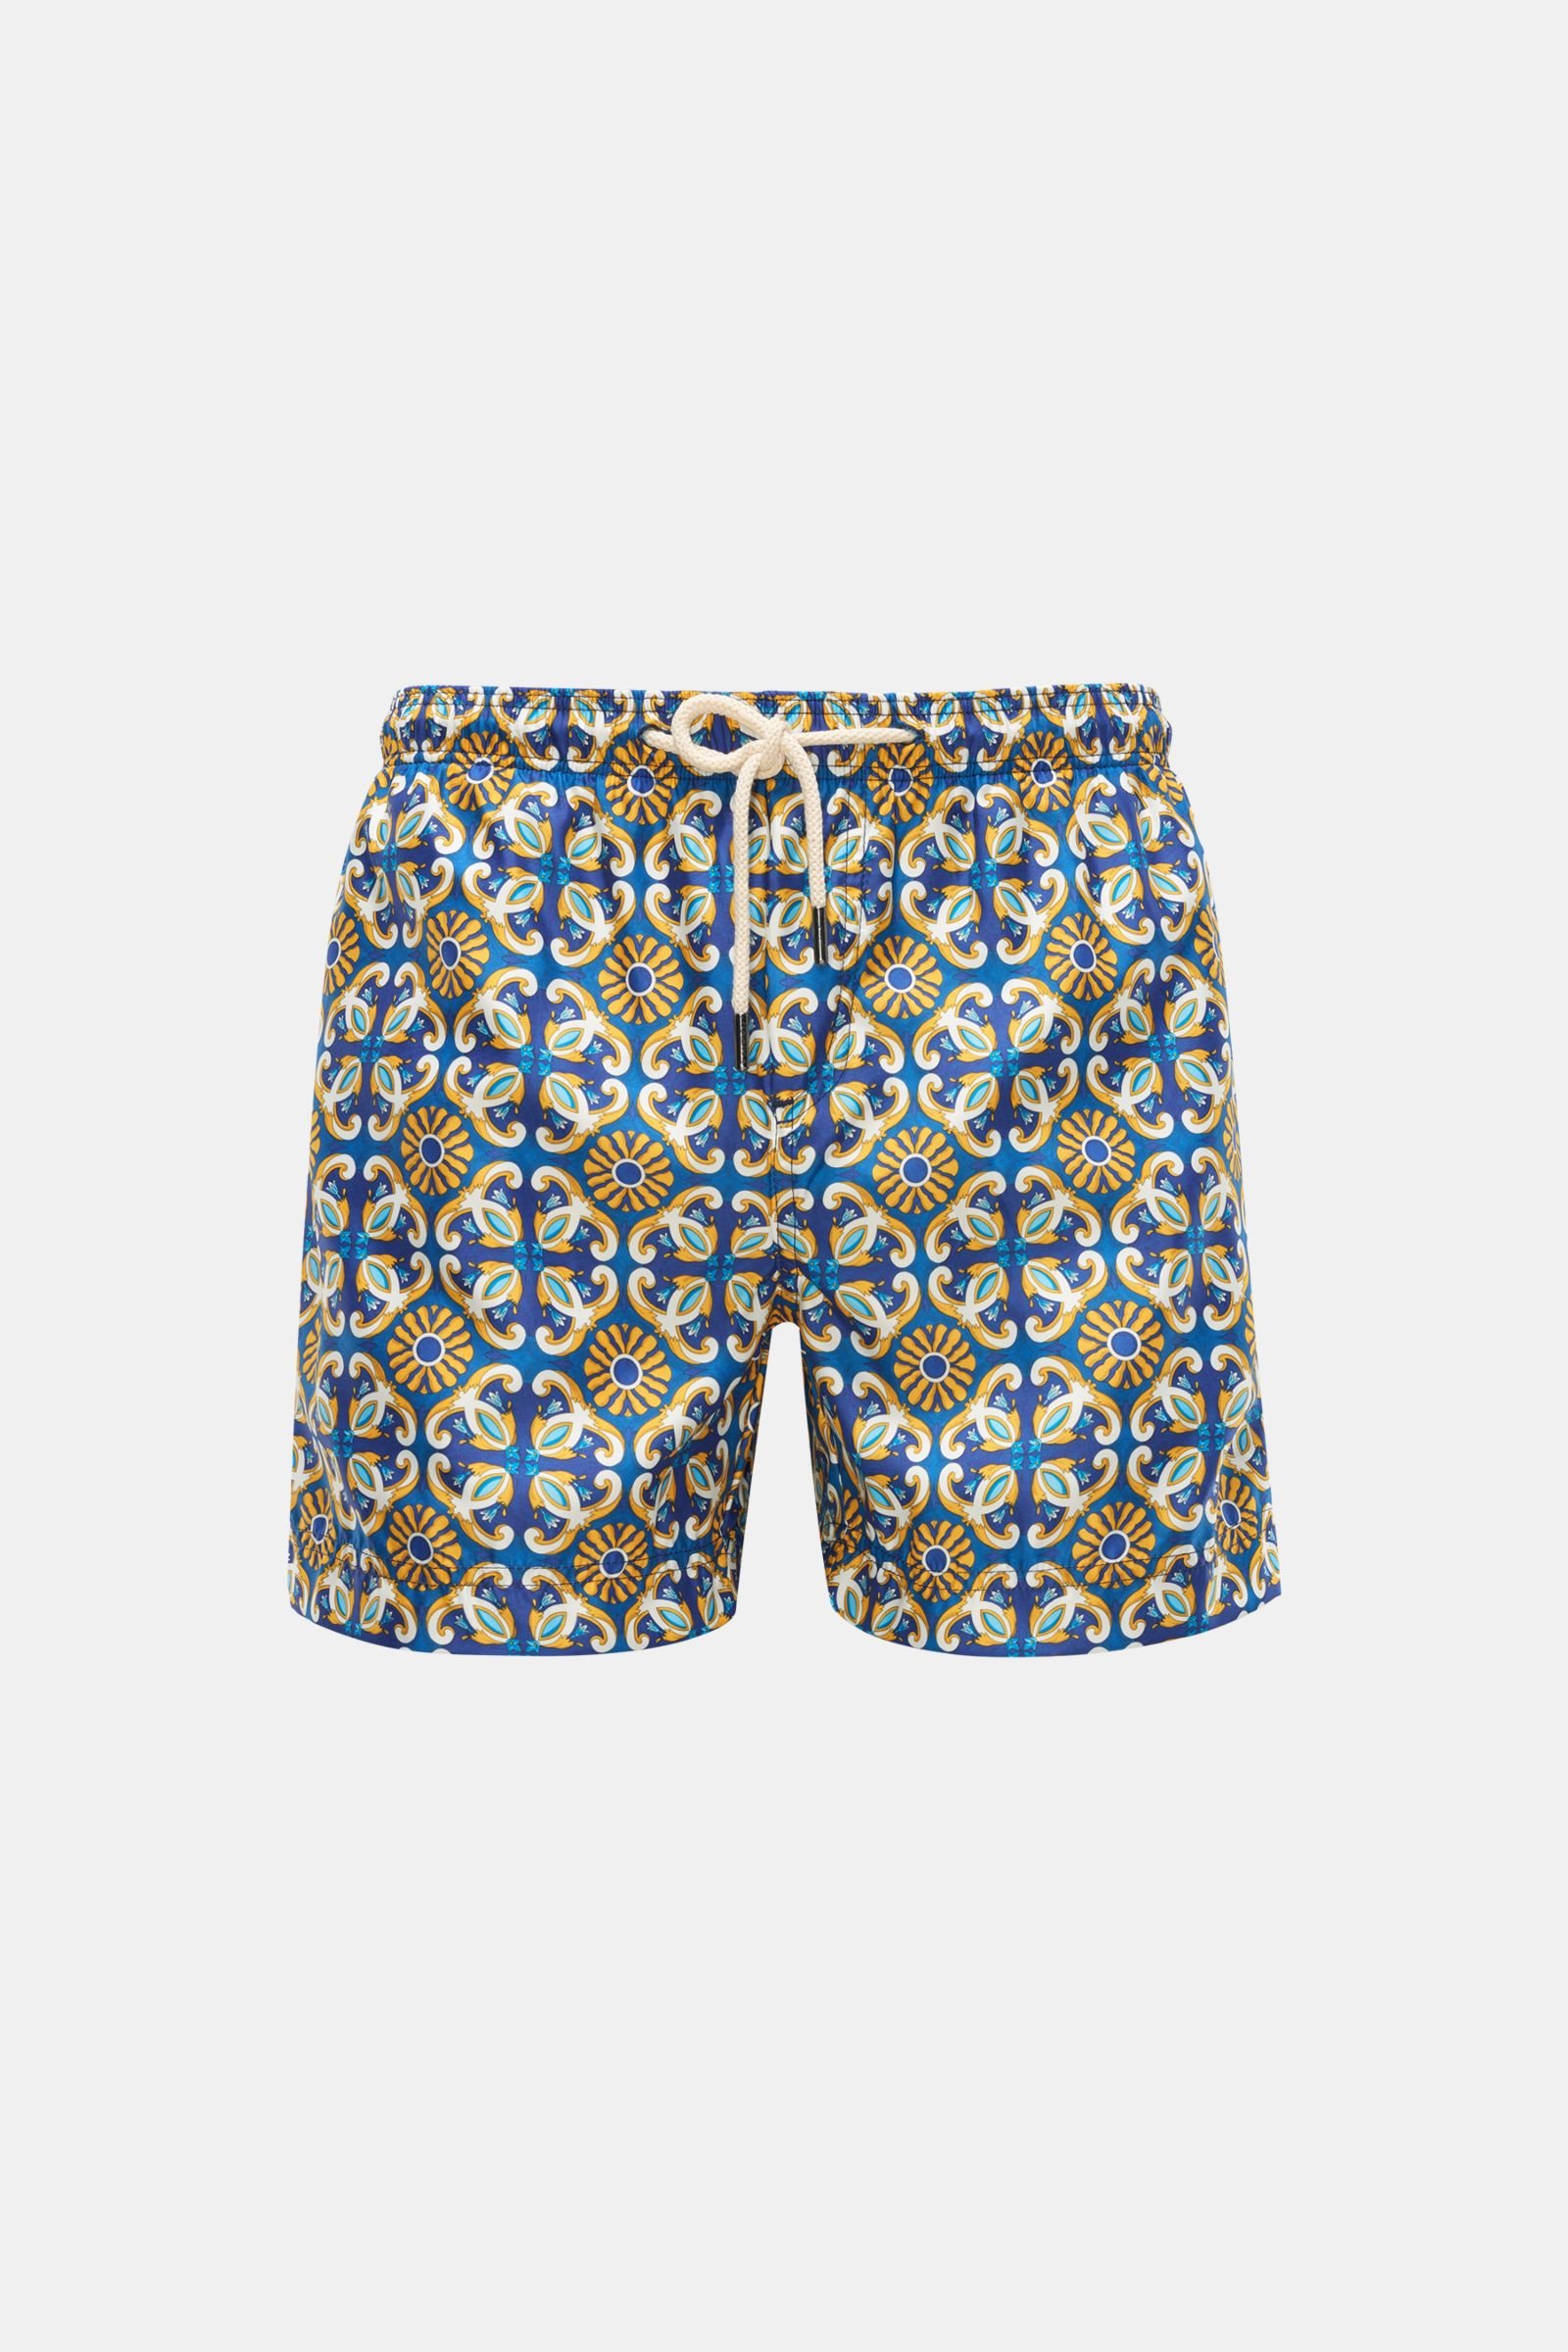 Swim shorts navy/yellow patterned 